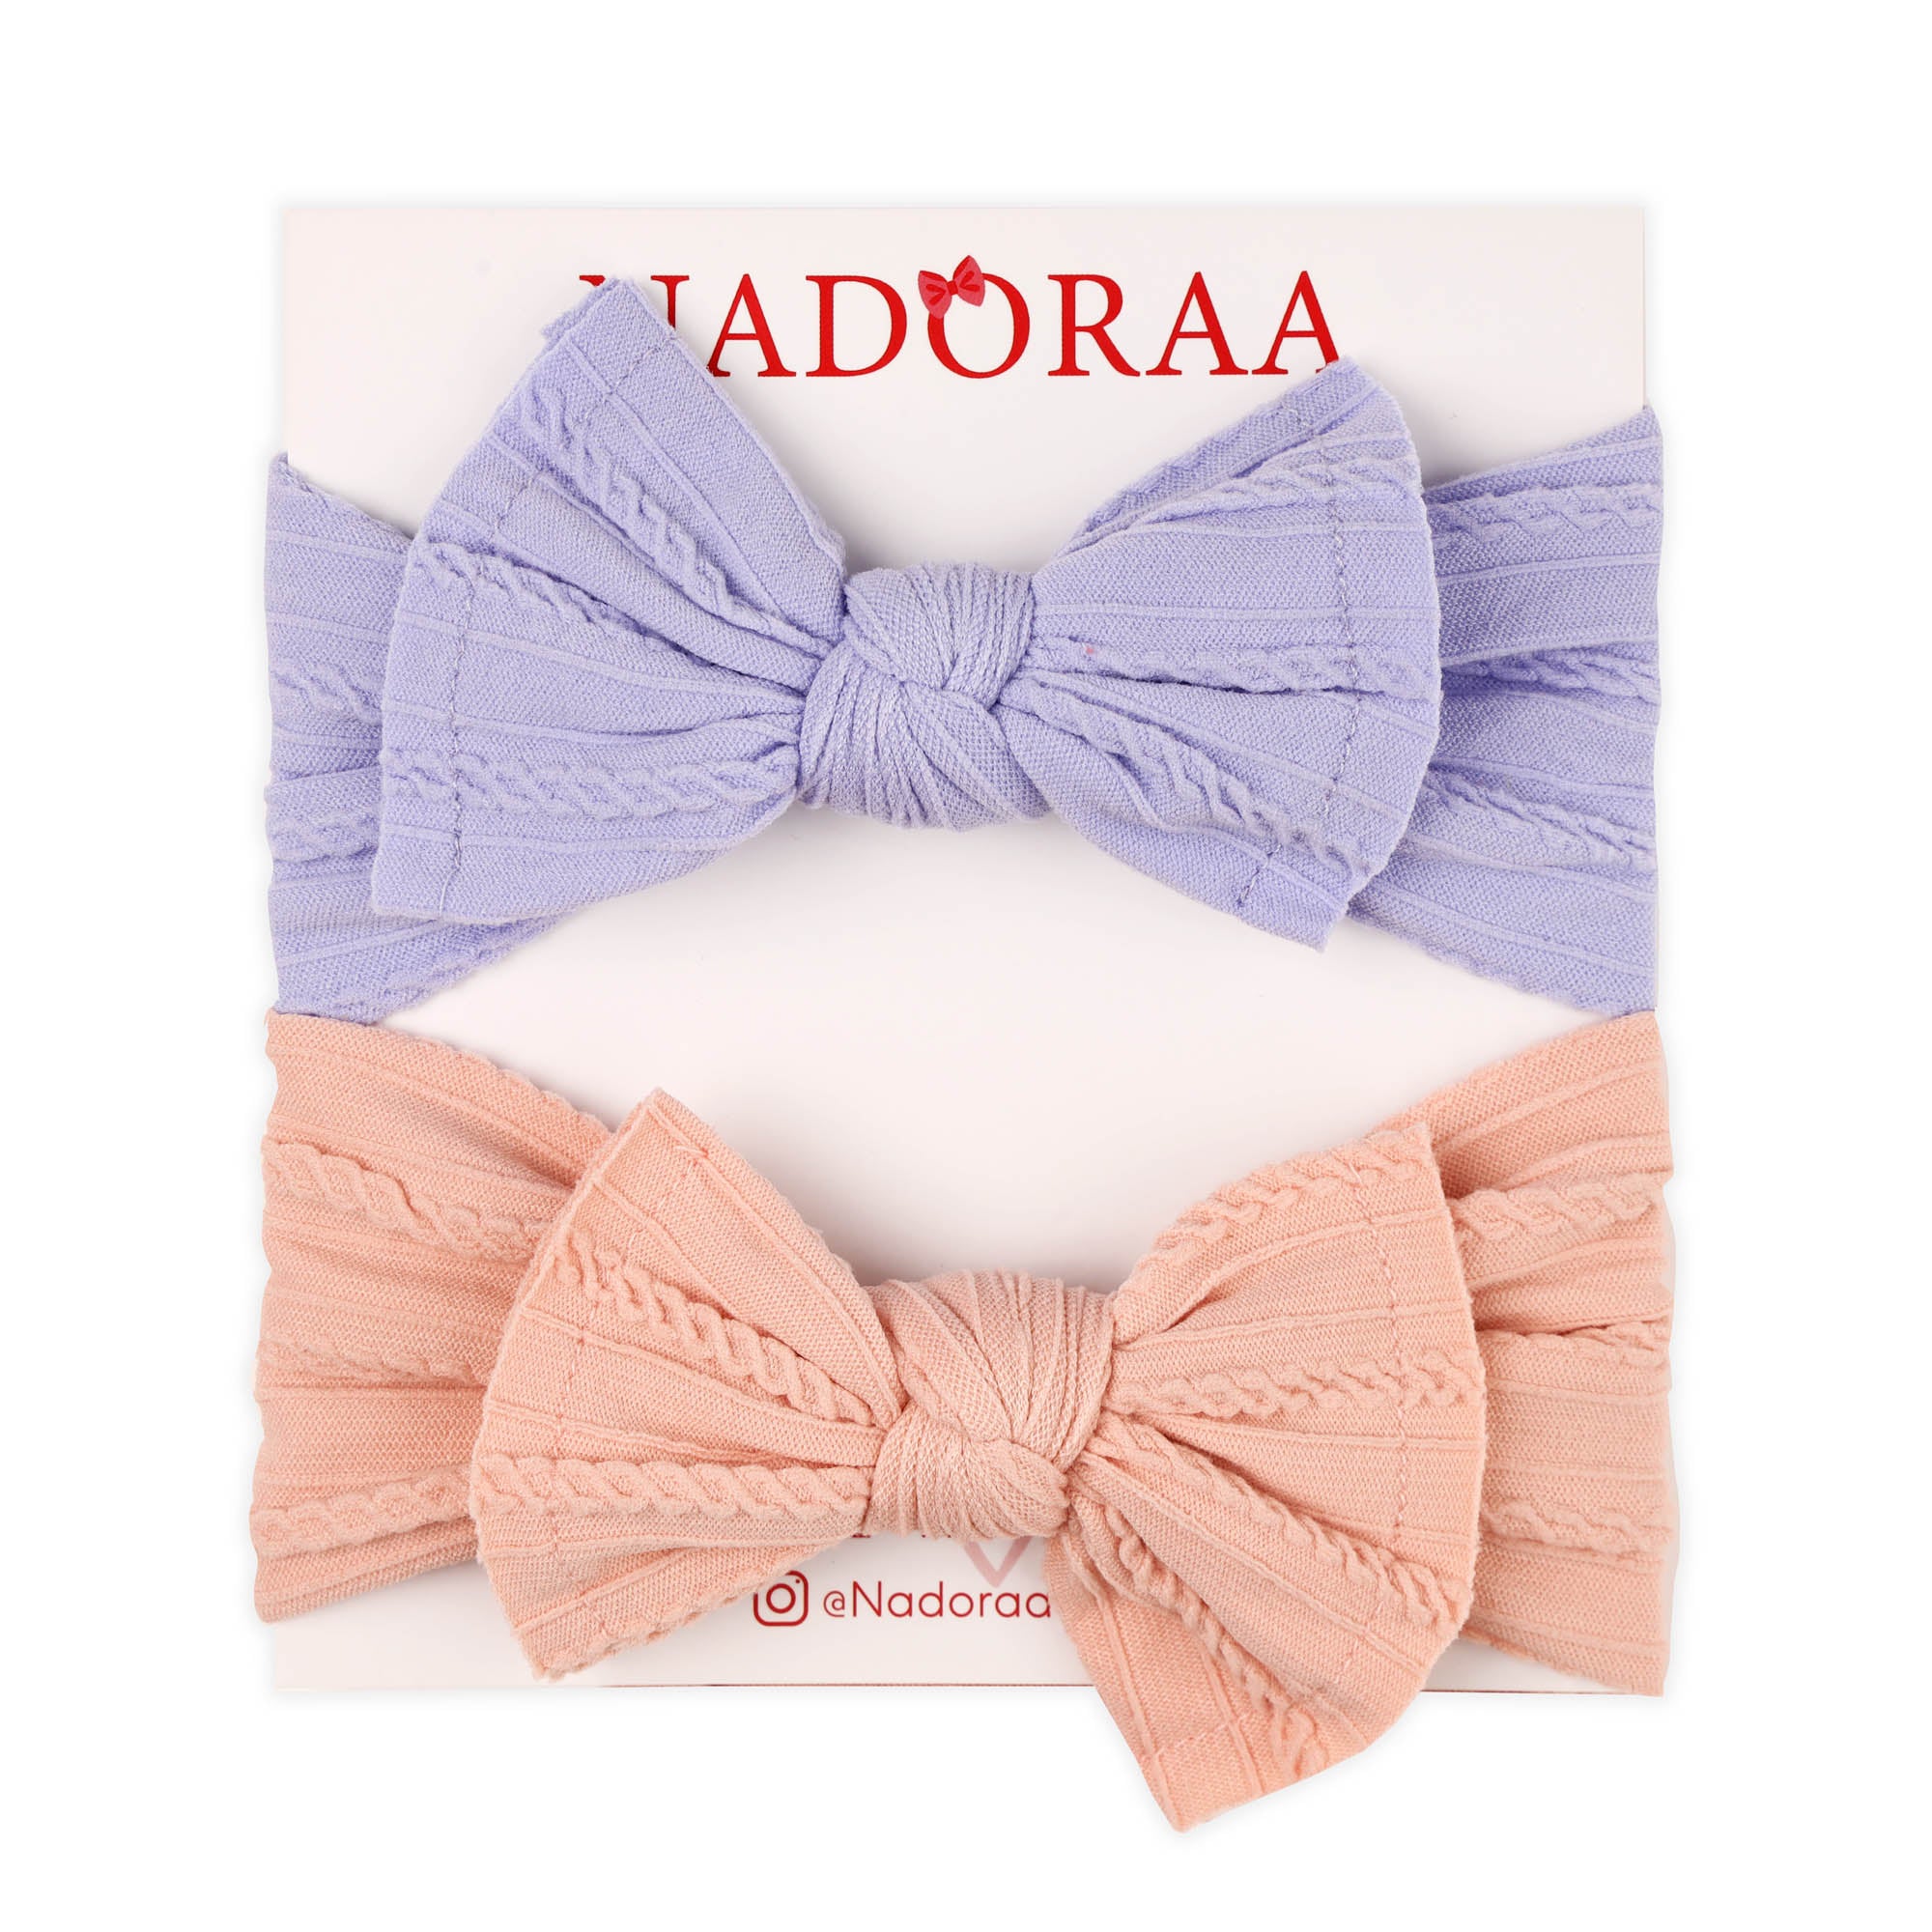 Nadoraa Peach & Purple Baby Headbands- 2 Pack